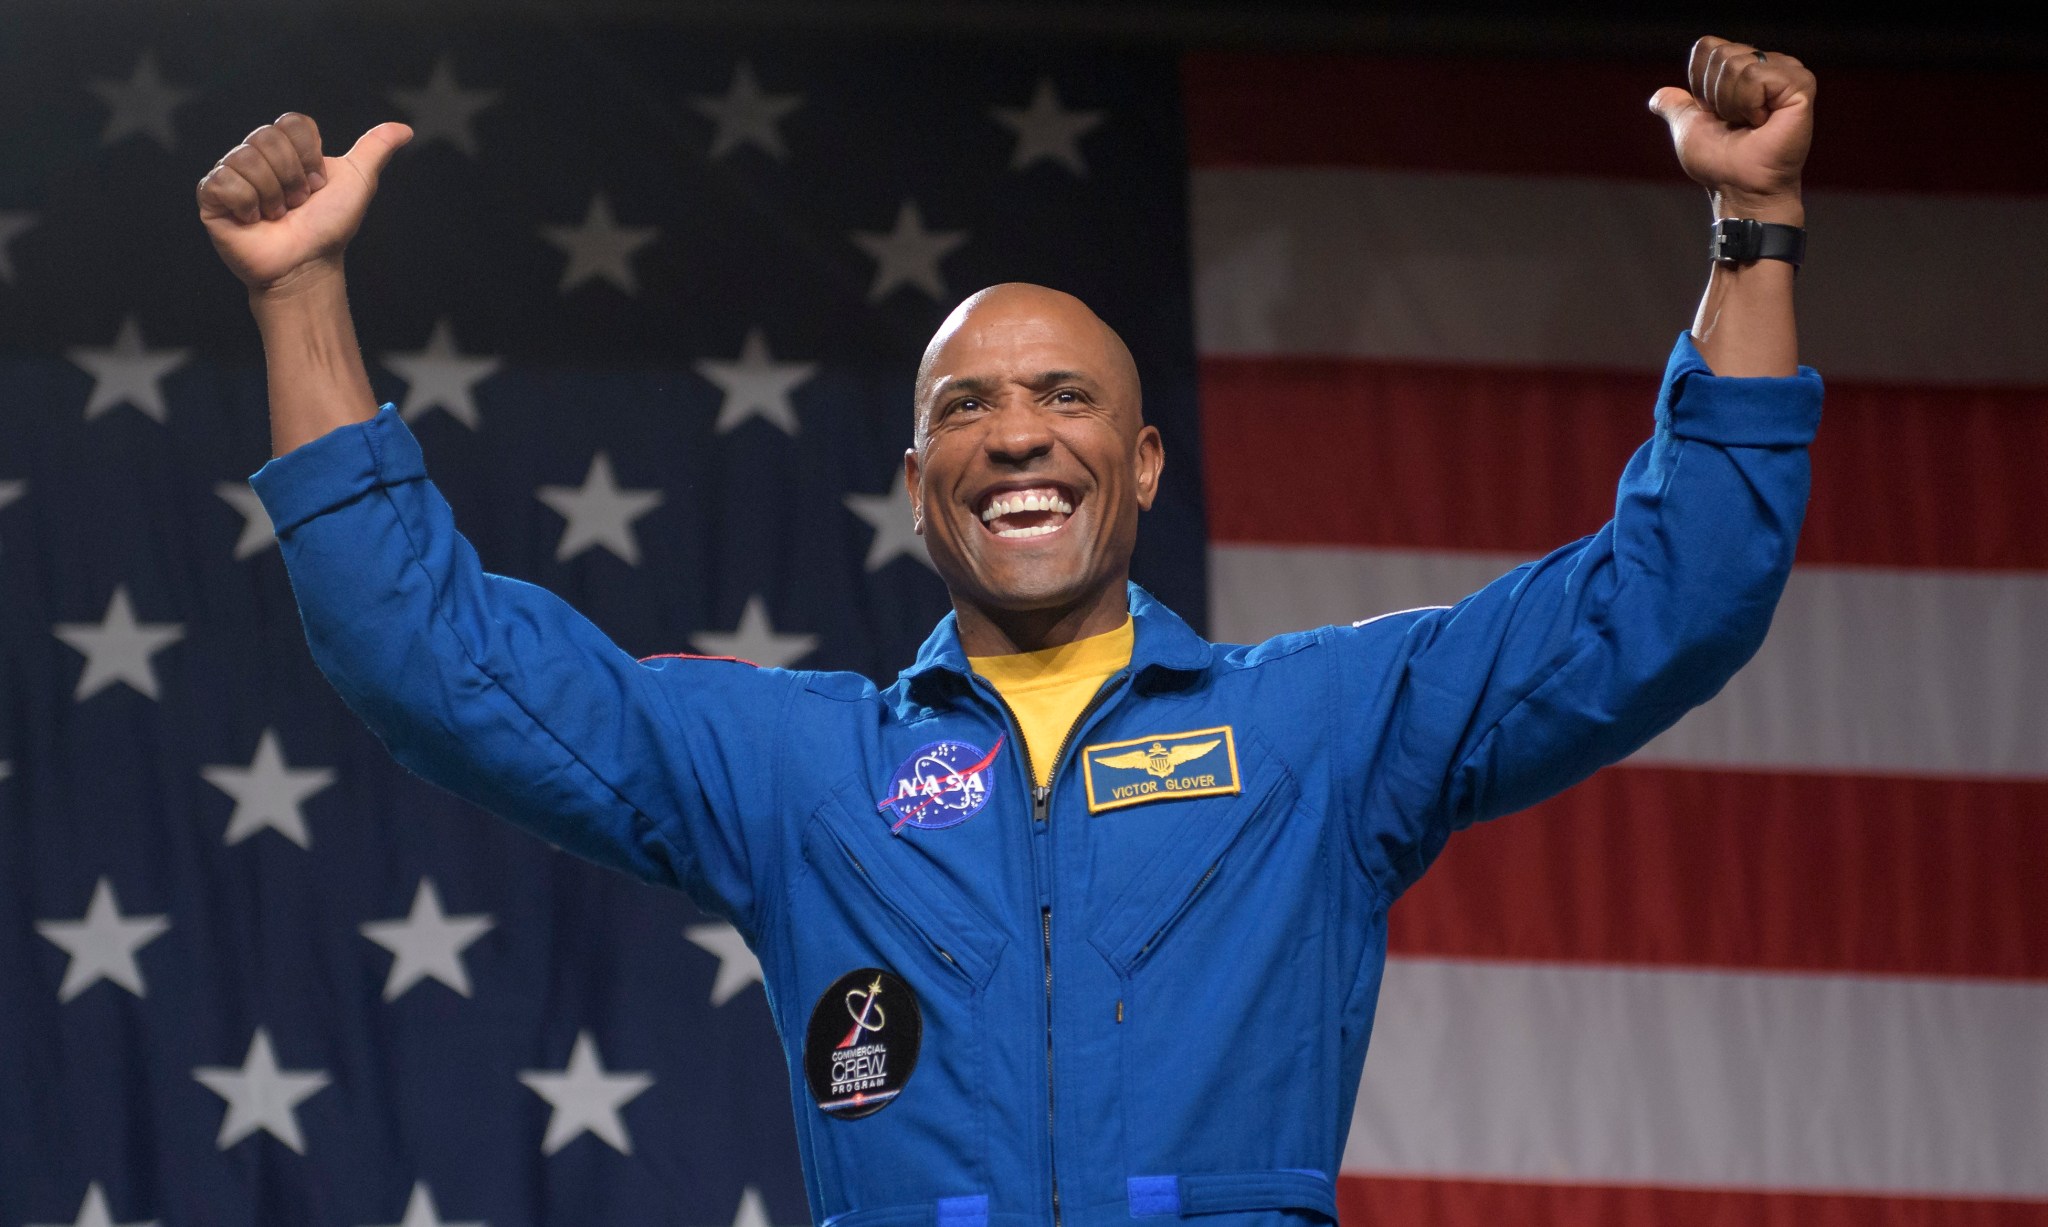 NASA astronaut Victor Glover